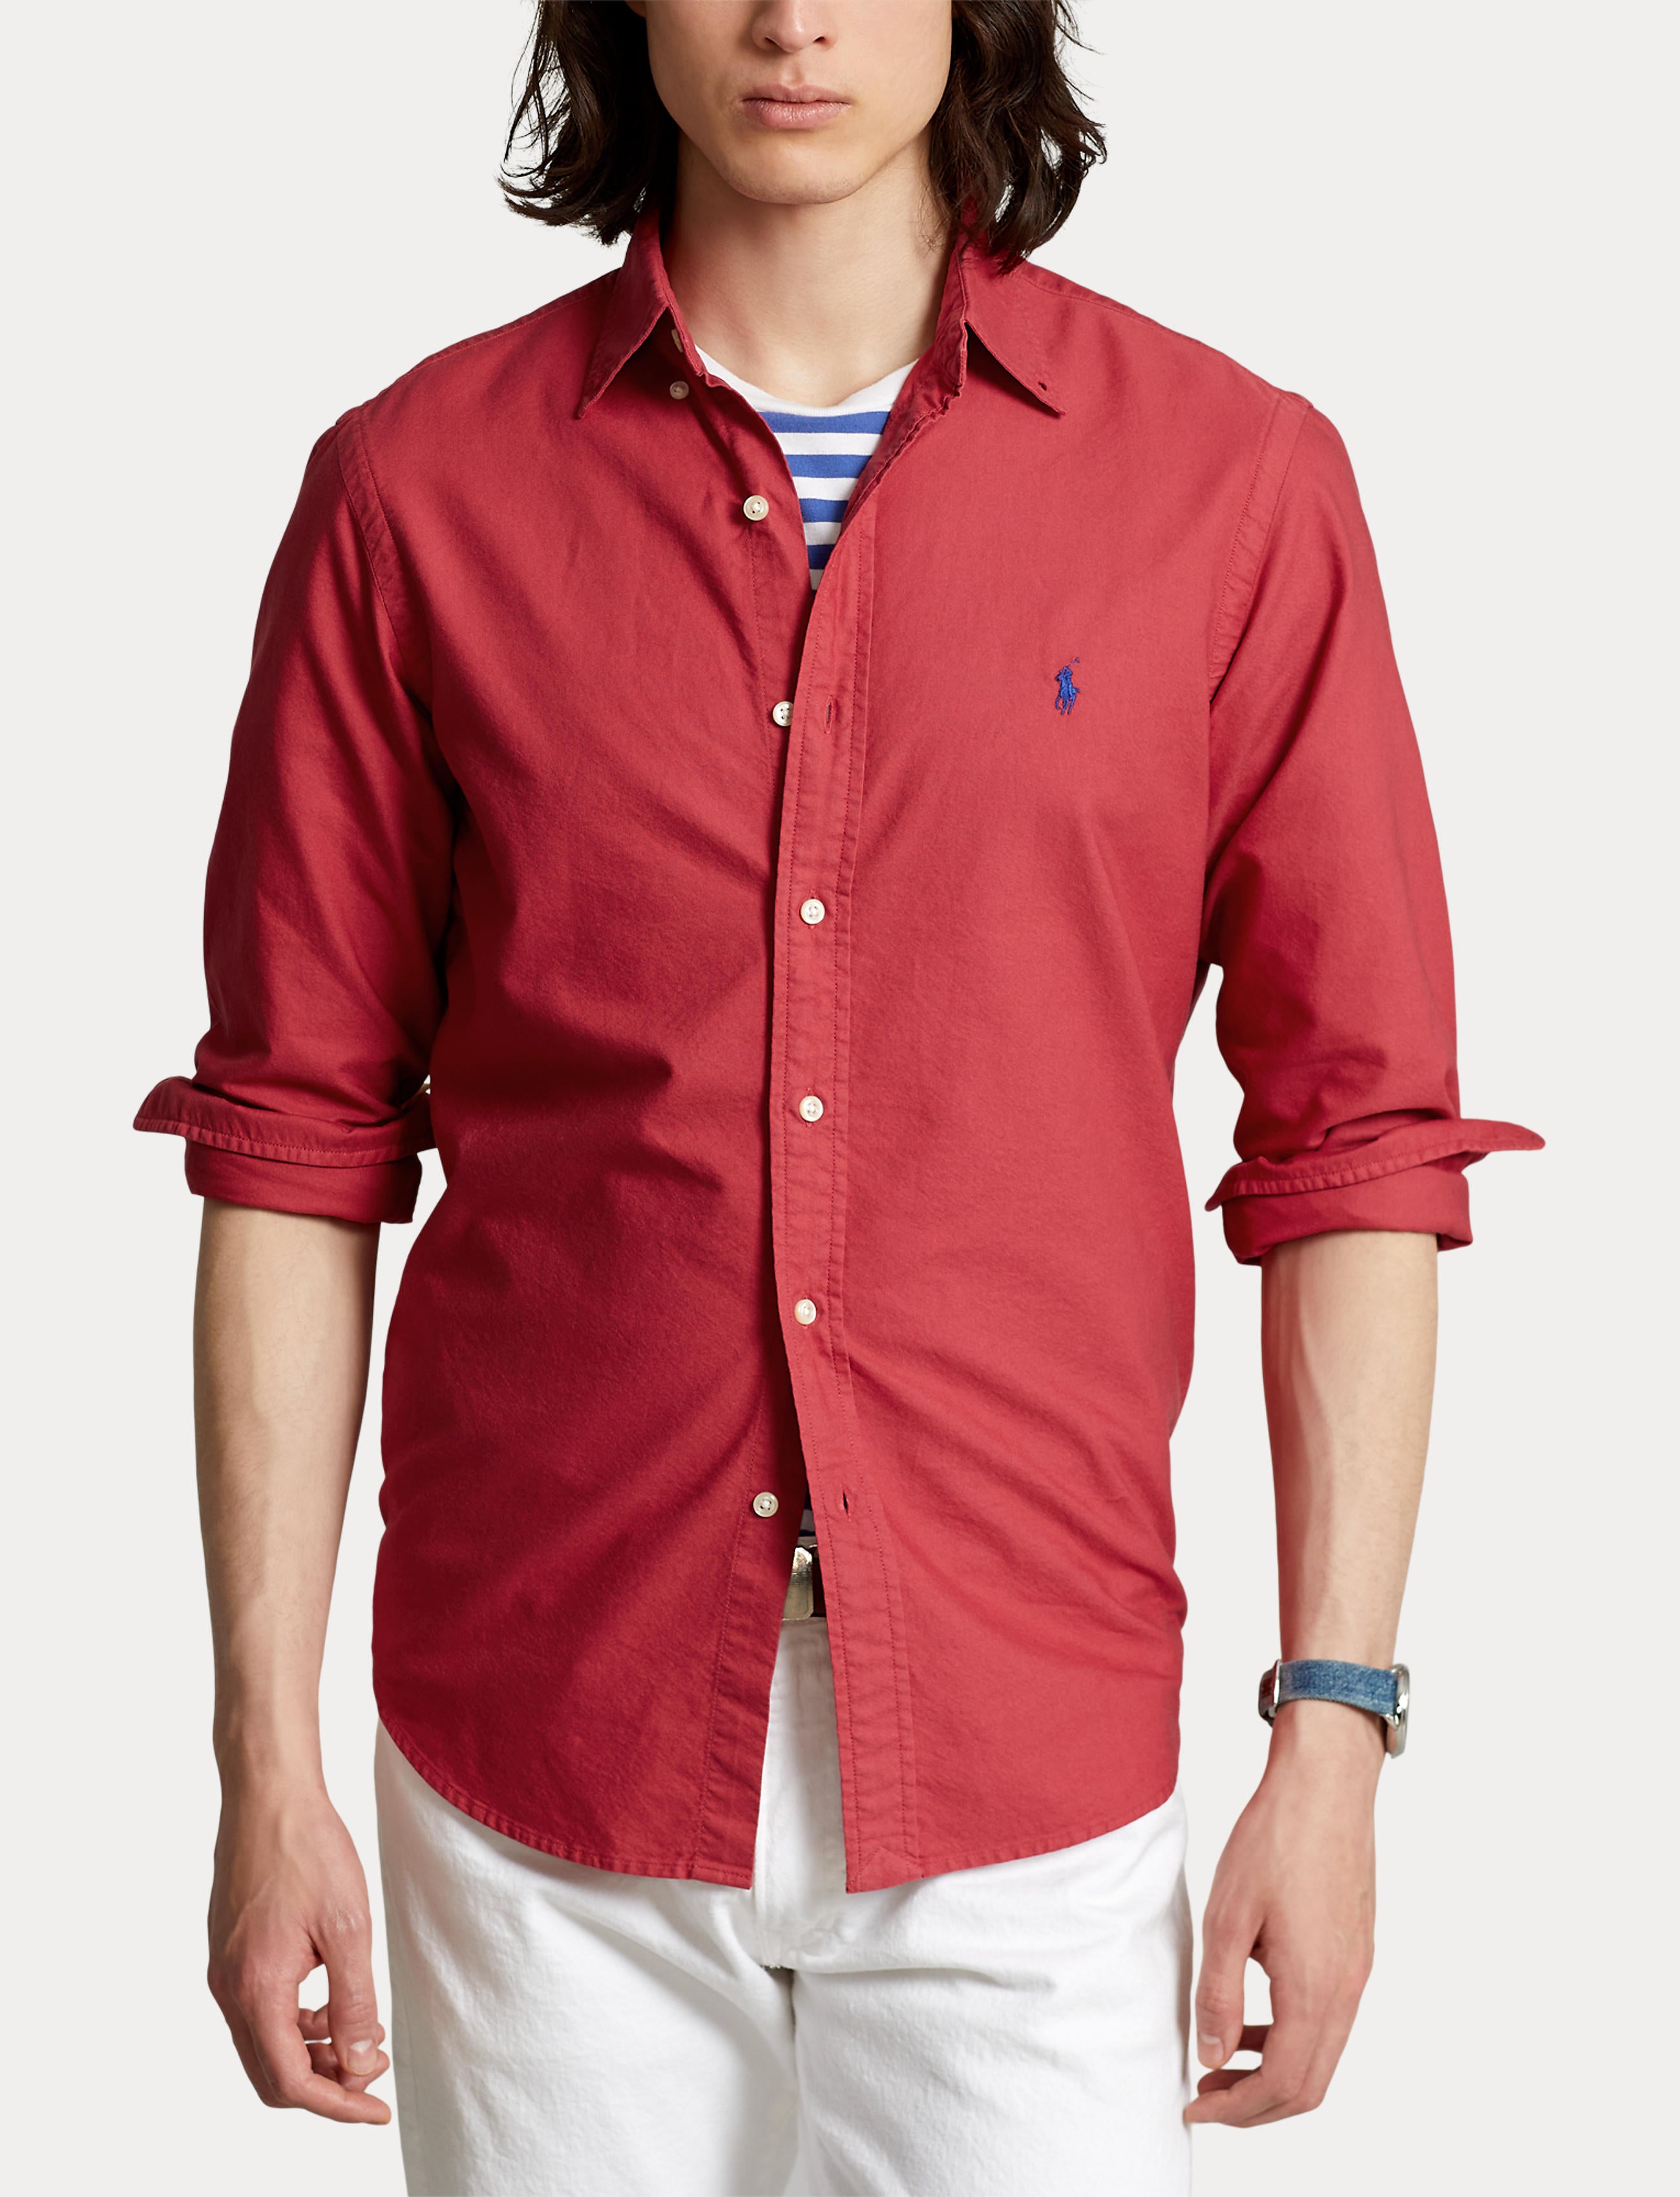 Polo Ralph Lauren Oxford Shirt Sunrise Red – routleys.com.au